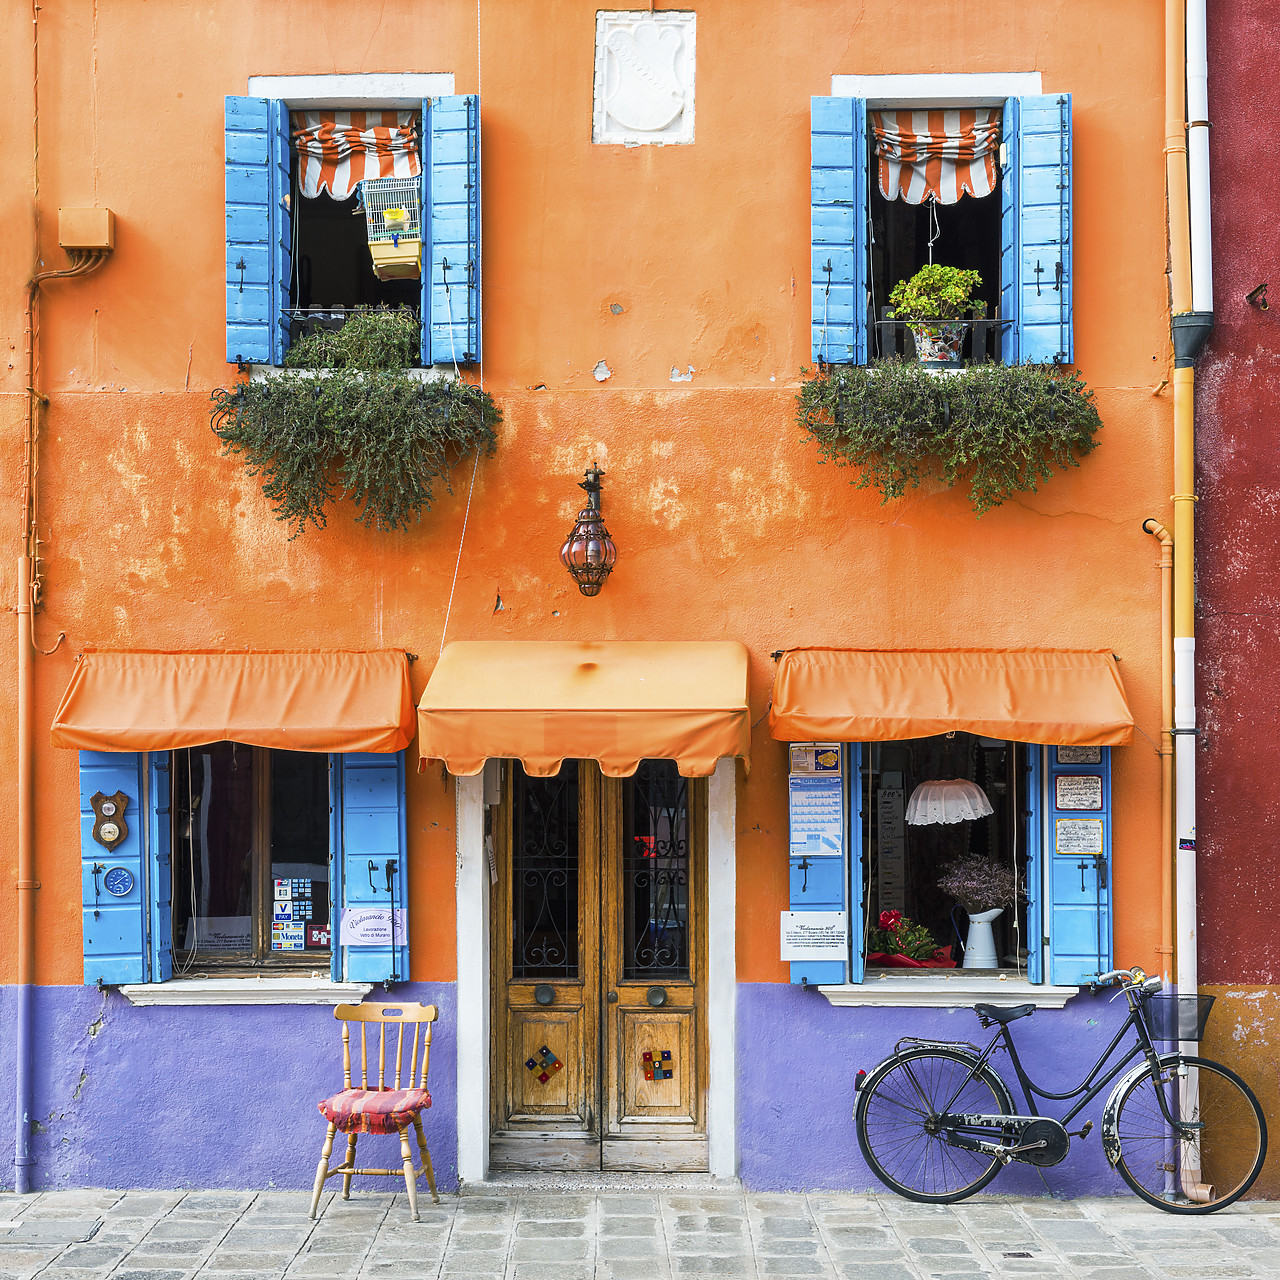 #140439-1 - Colourful Shop & Bike, Burano, Venice, Italy